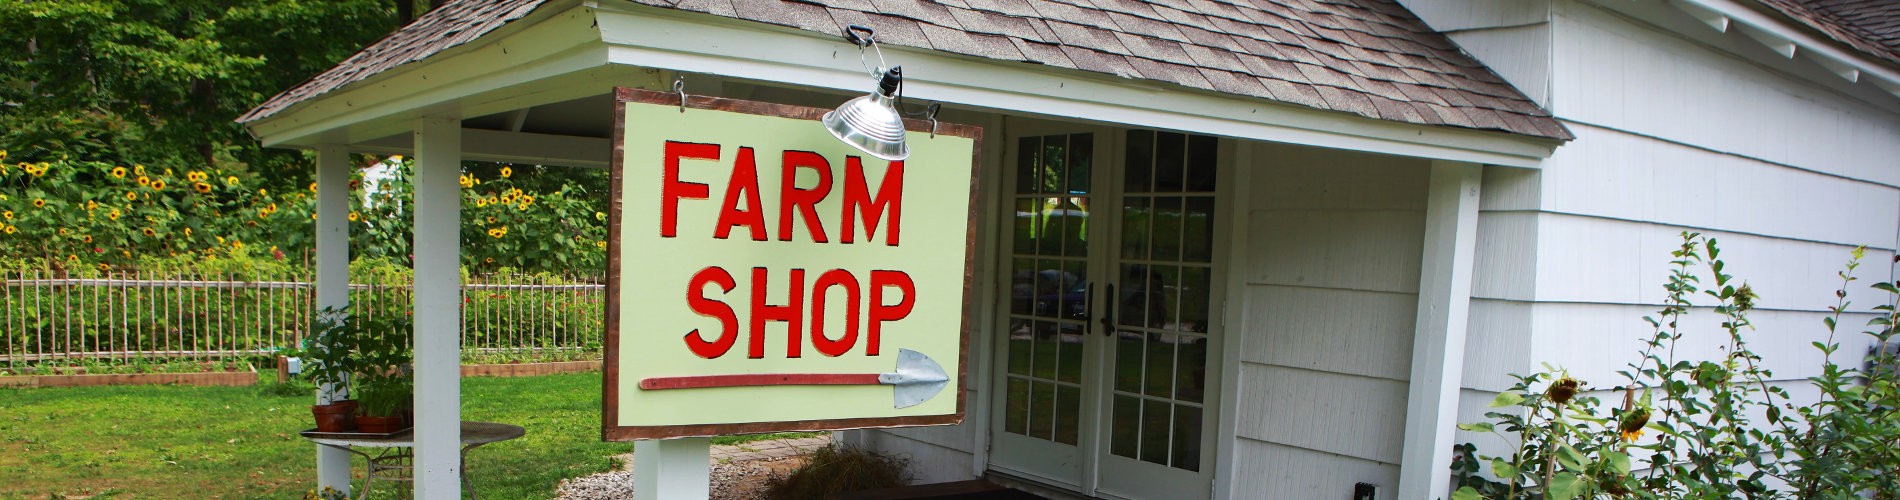 Purdy's Farm Shop Sign